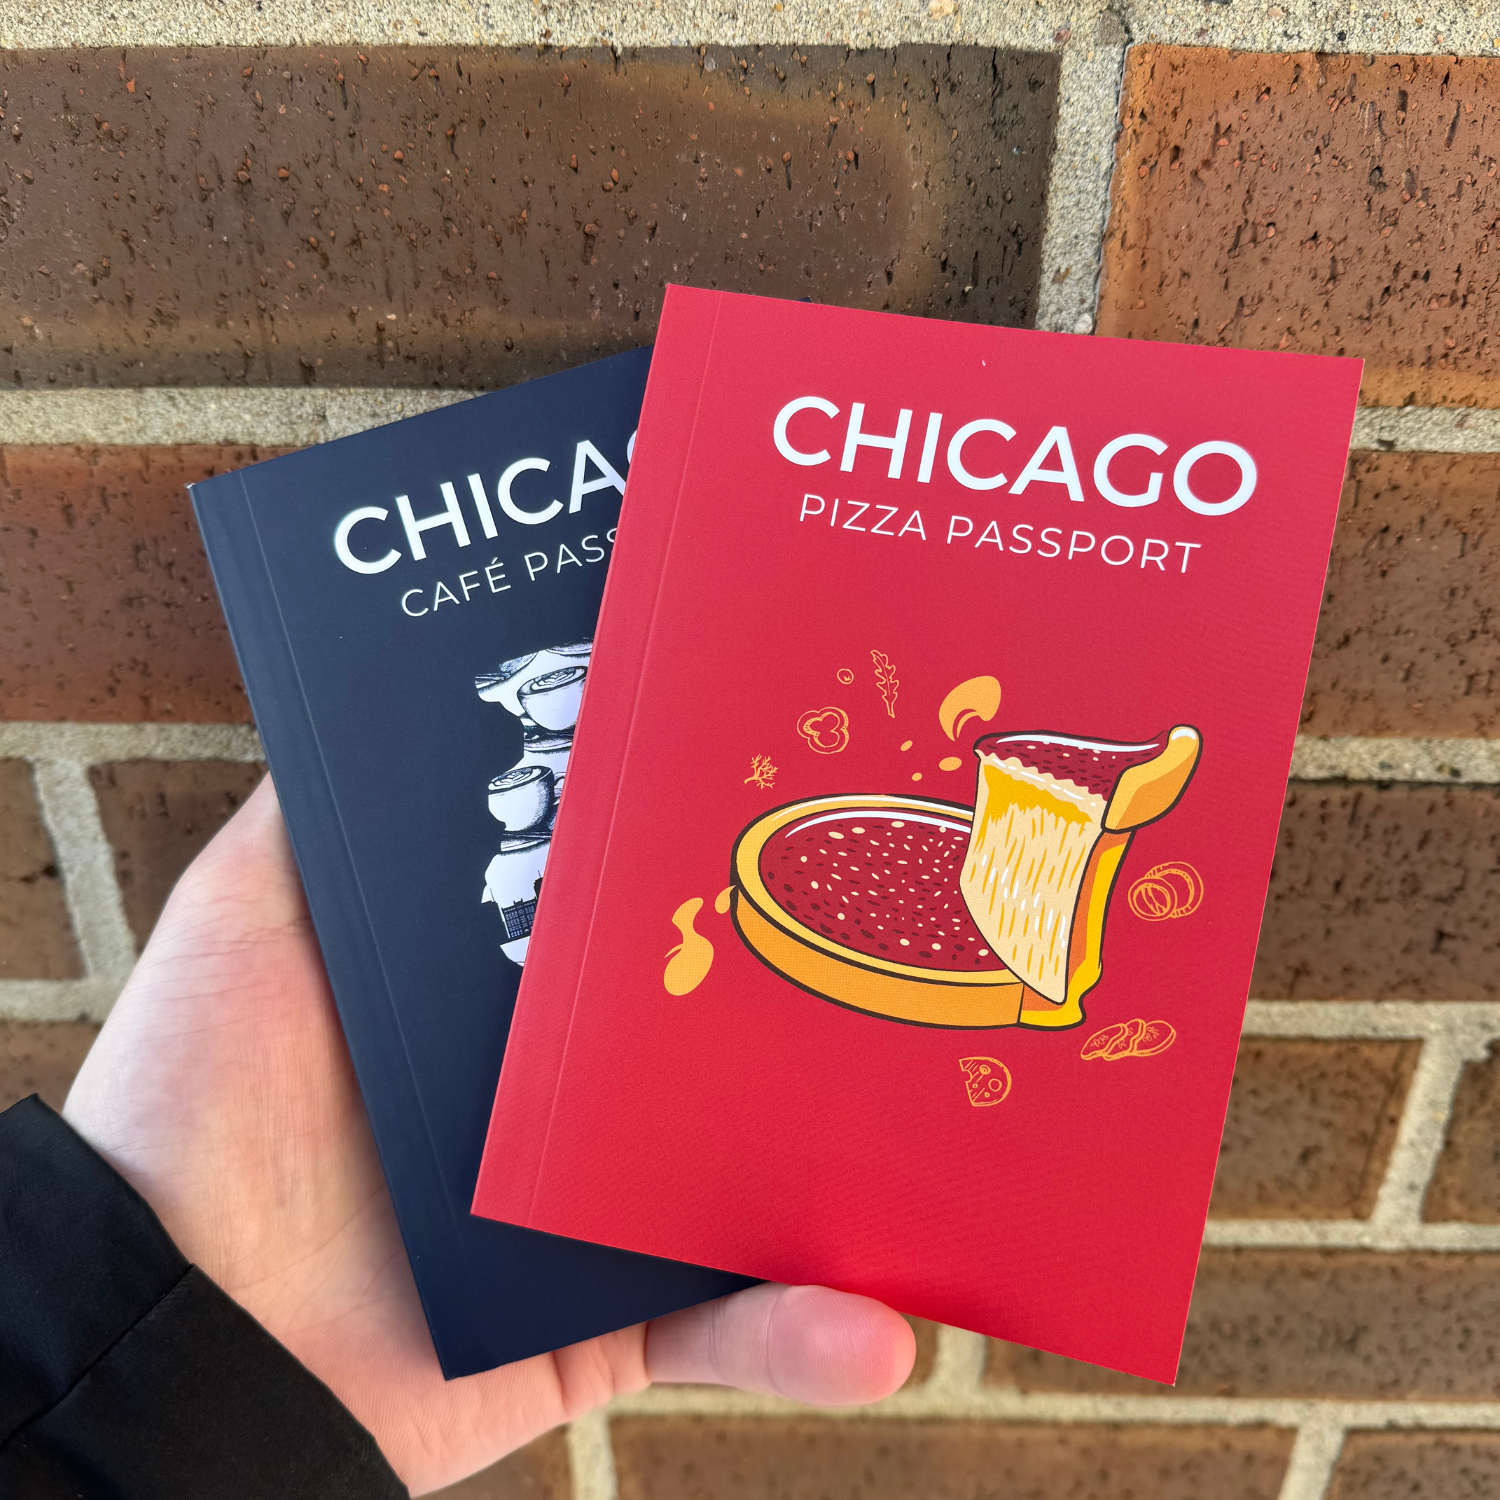 Chicago Pizza Passport and Cafe Passport